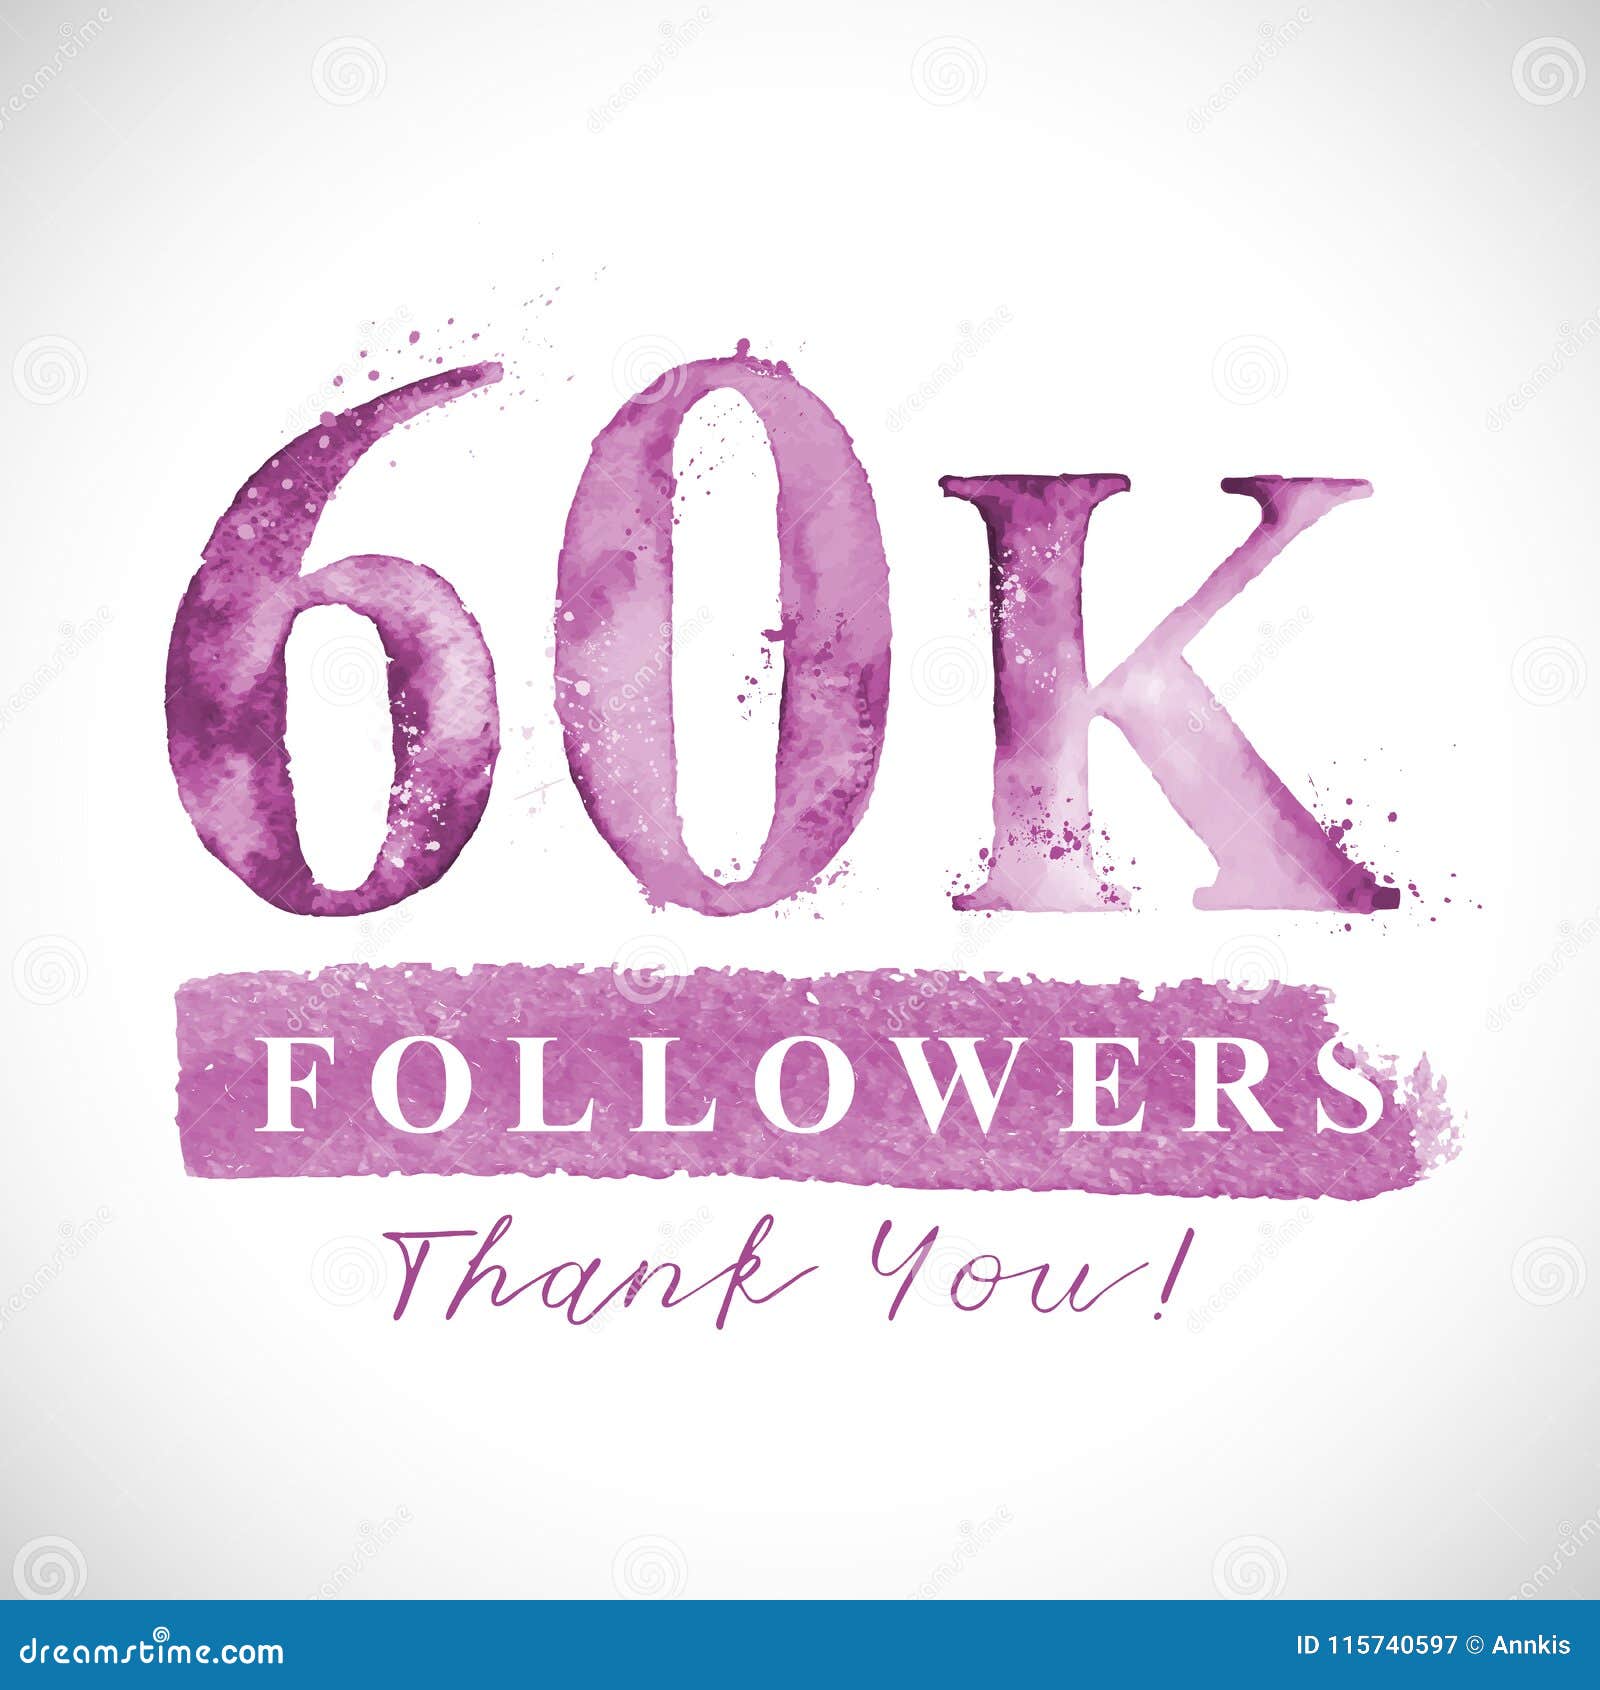 thank you 60 k followers card for social networks - 60k instagram followers